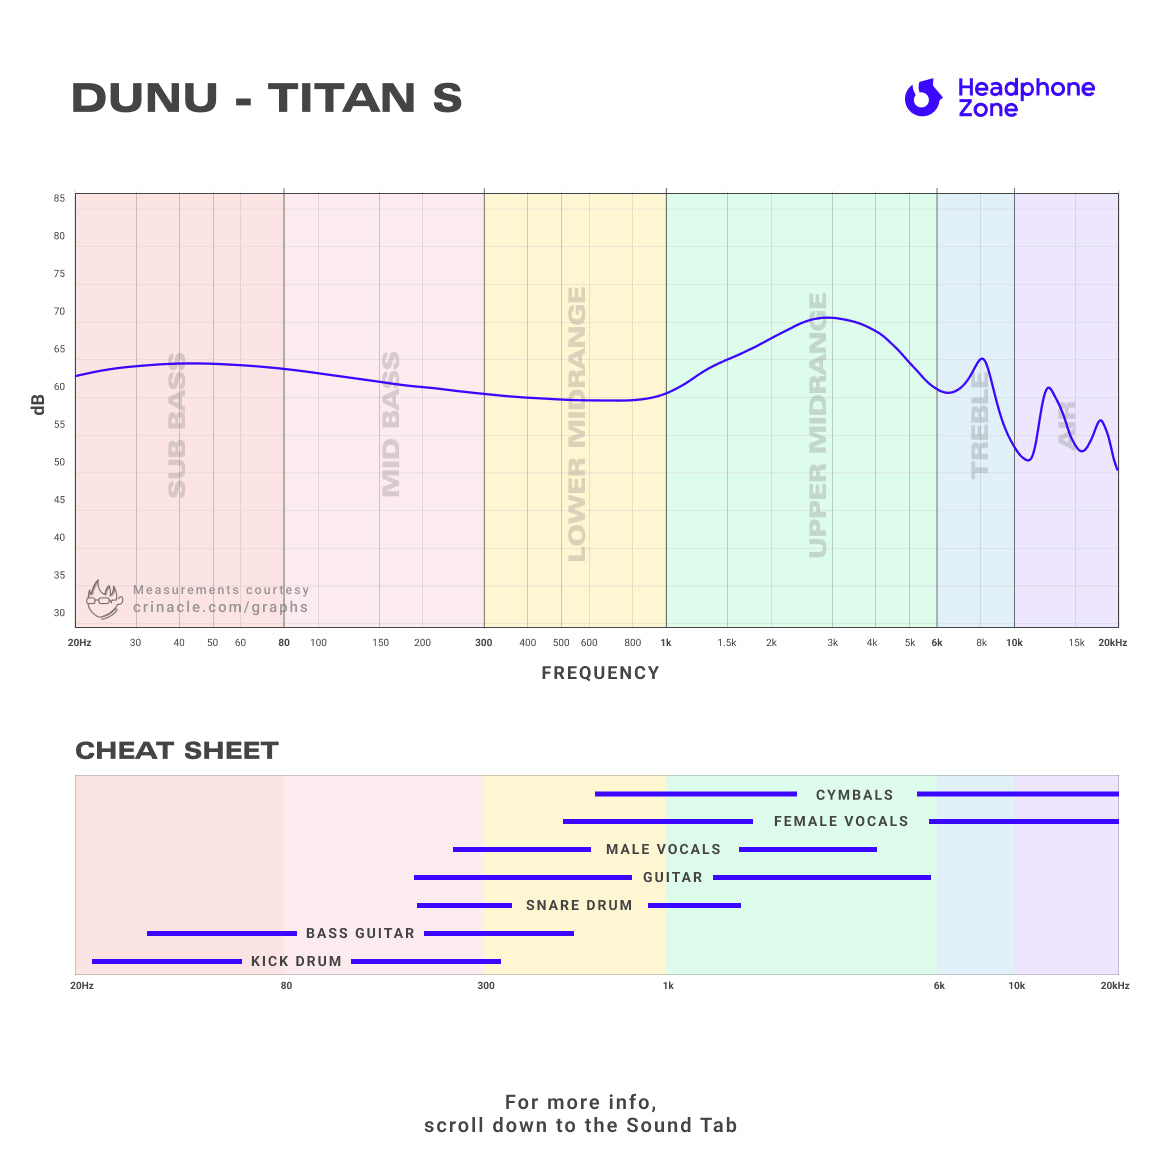 DUNU - TITAN S (Unboxed)